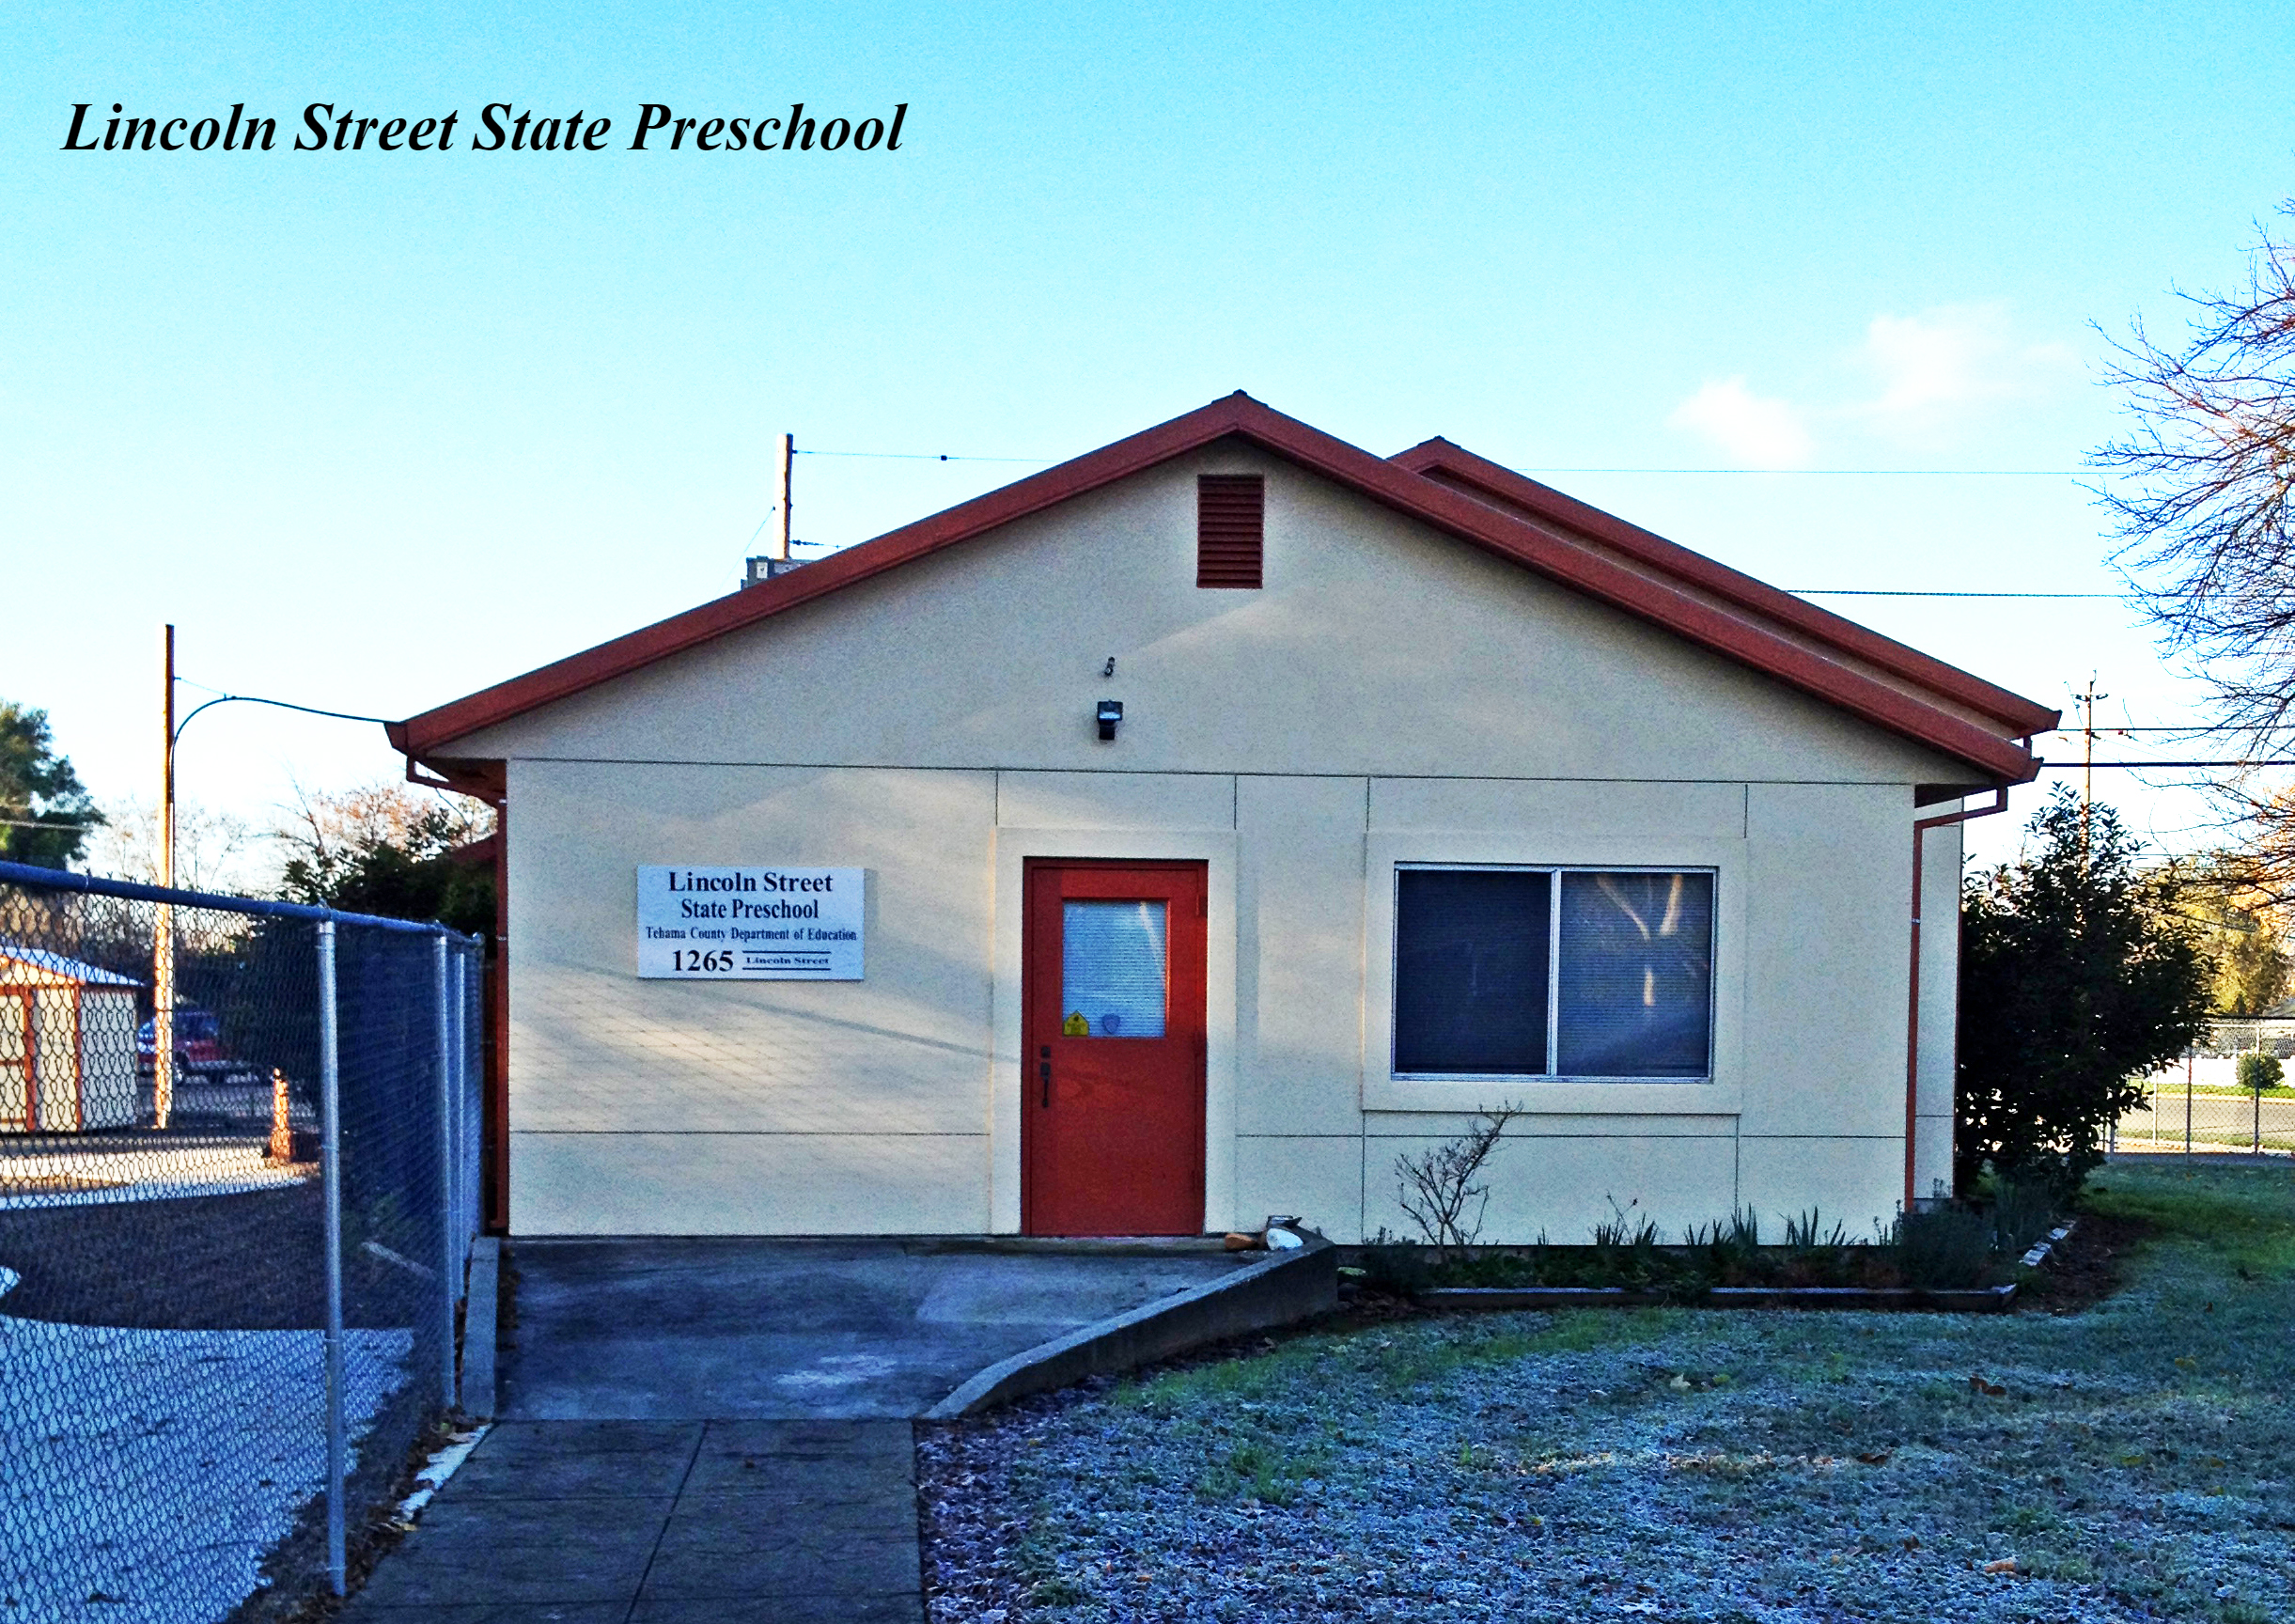 Lincoln Street State Preschool